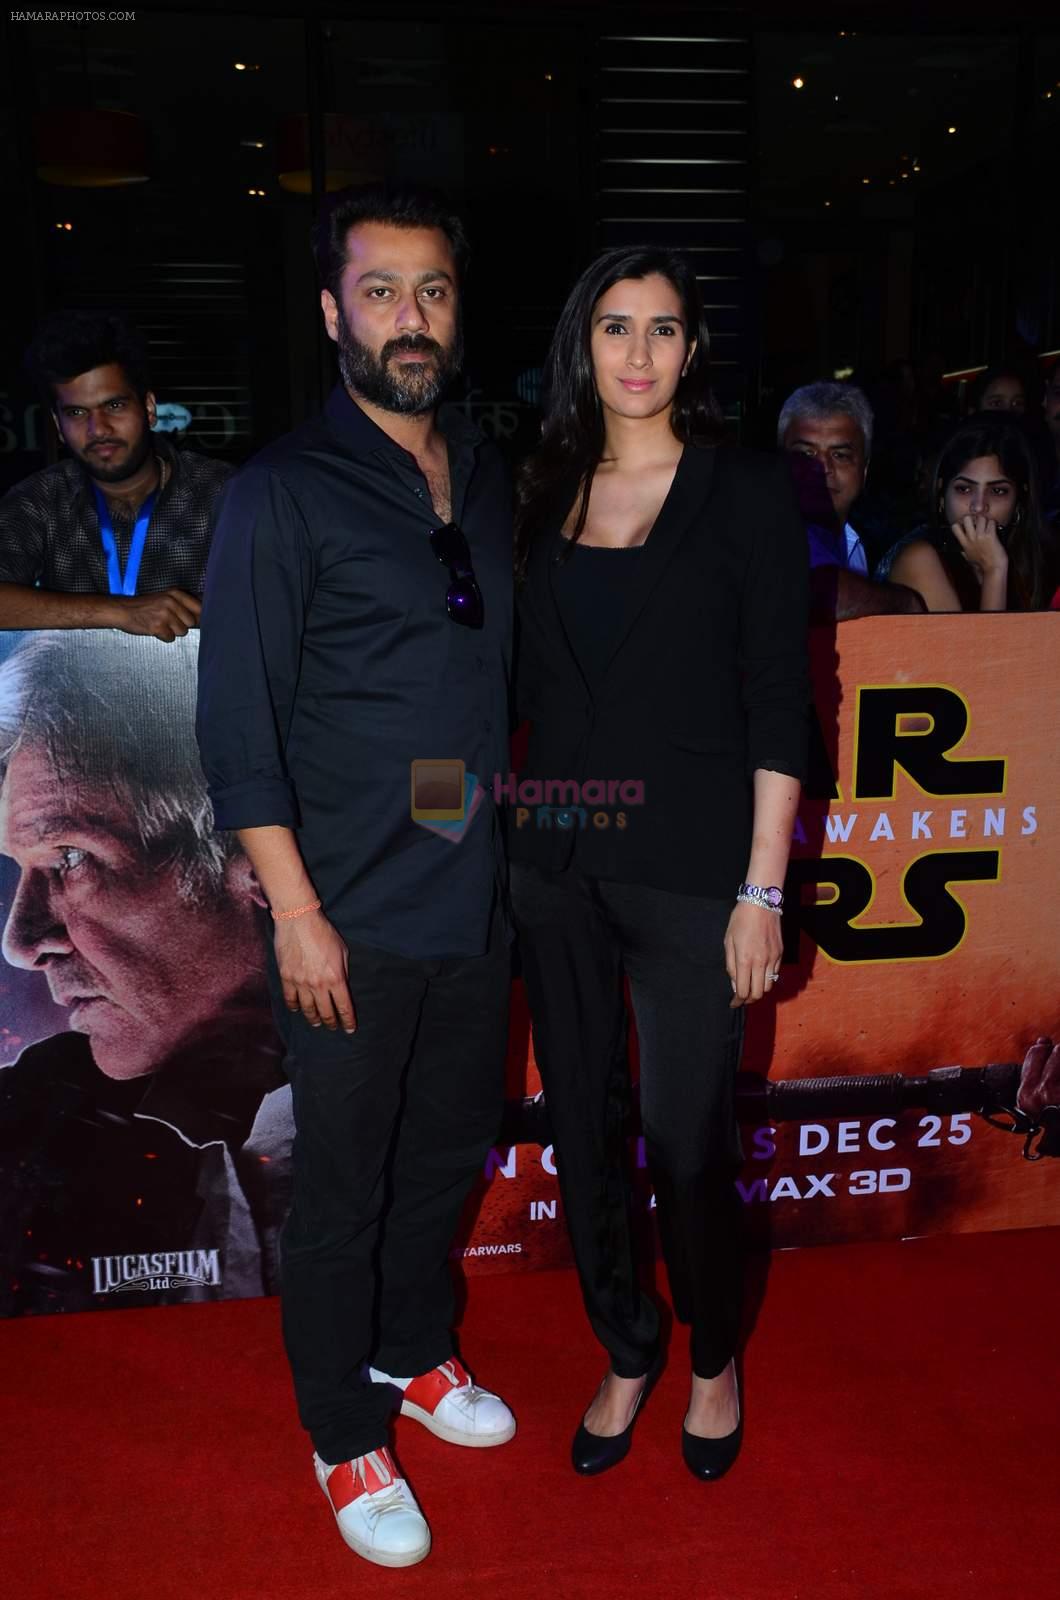 Abhishek Kapoor at Star Wars premiere on 23rd Dec 2015